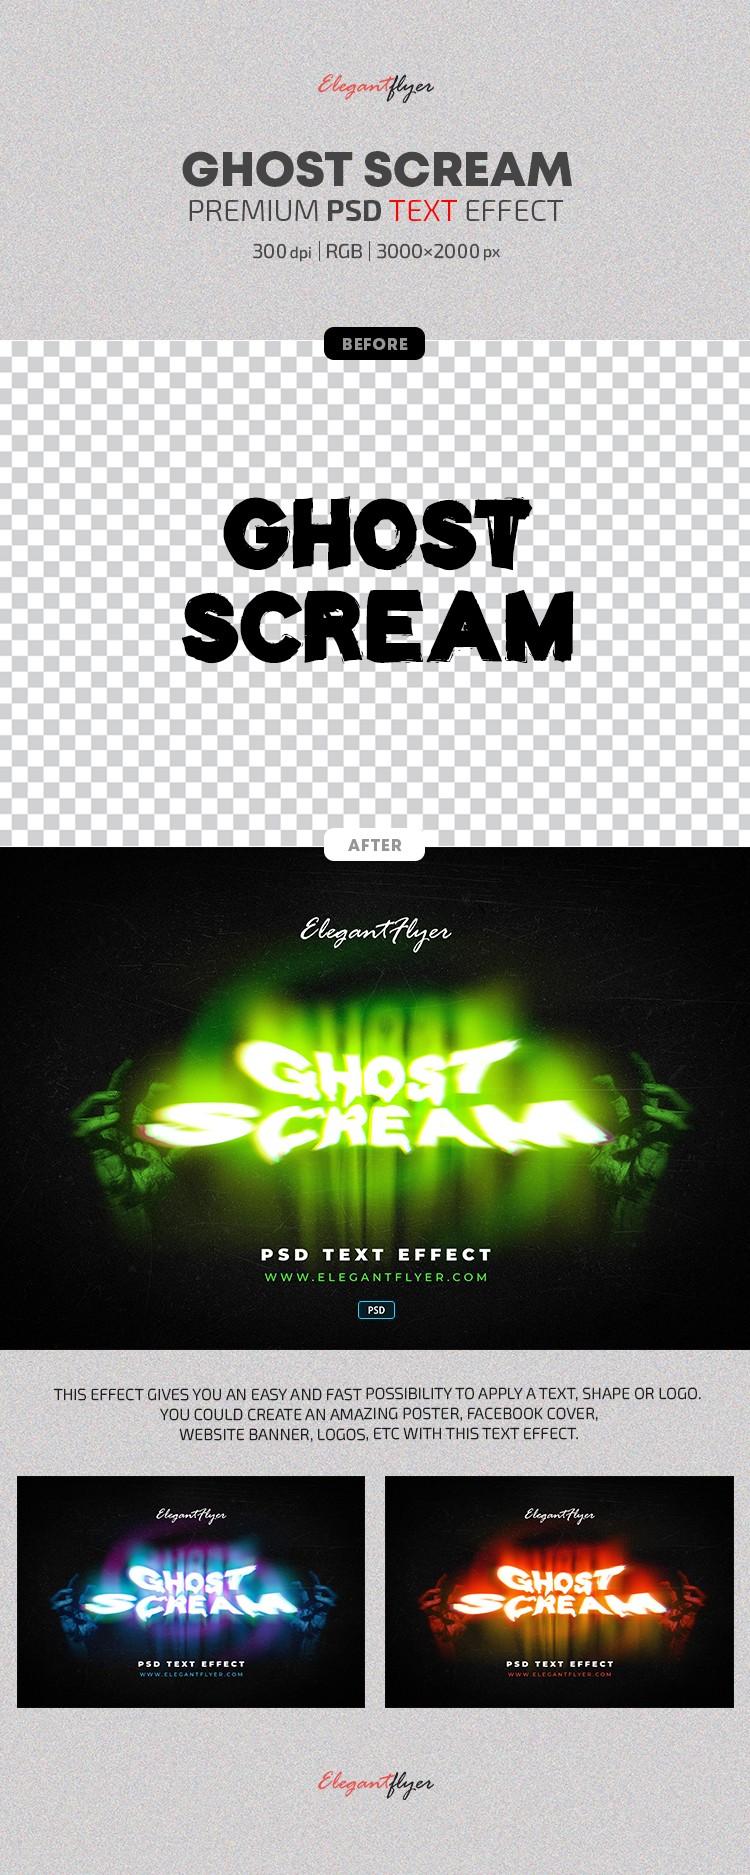 Ghost Scream Text Effect by ElegantFlyer